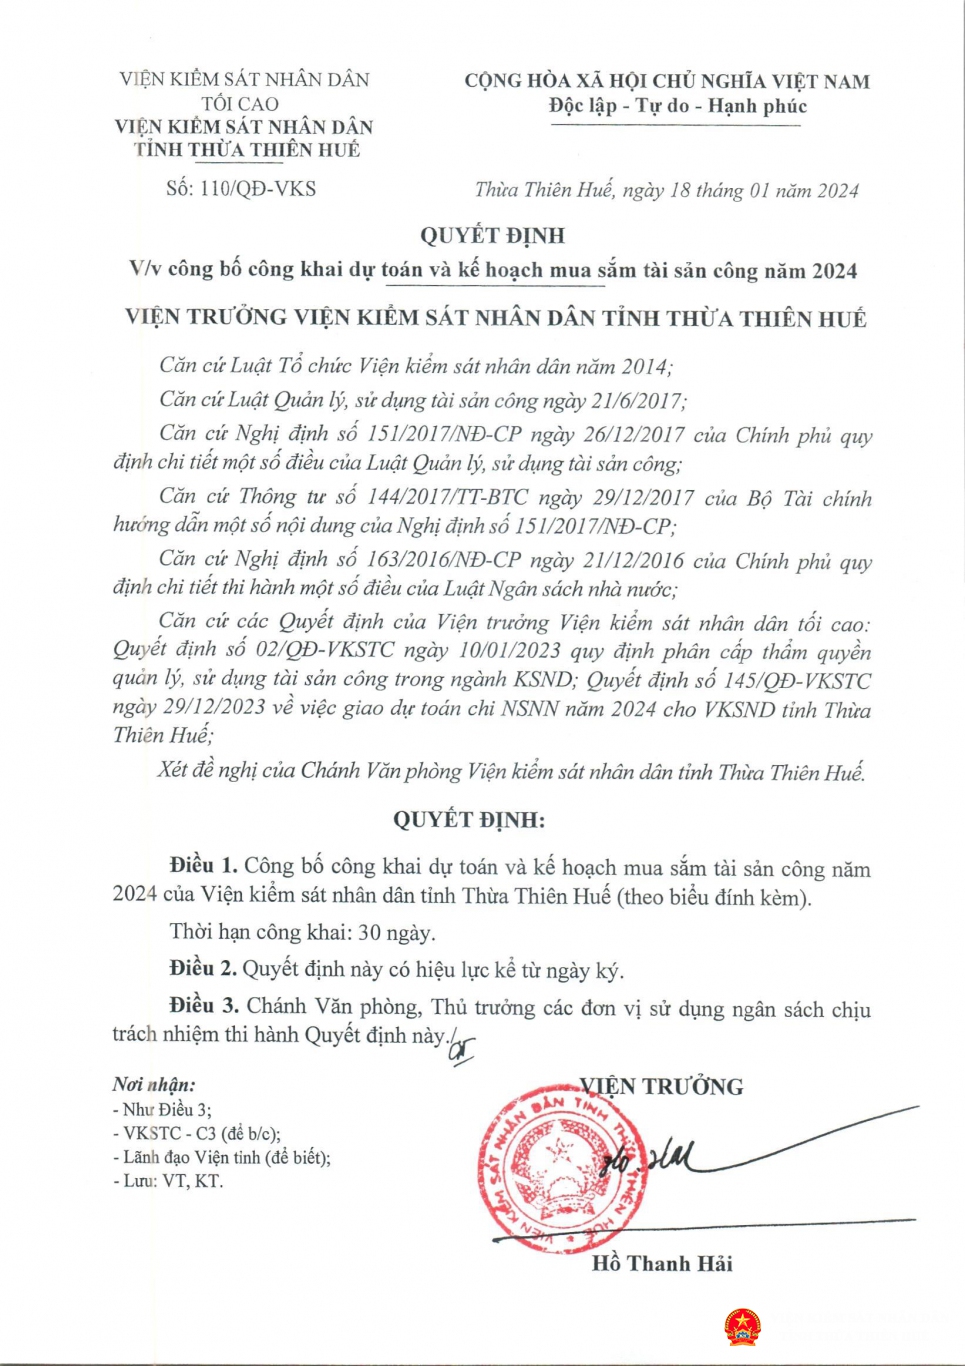 congkhai dtkh muasamtscong 2024 page 1